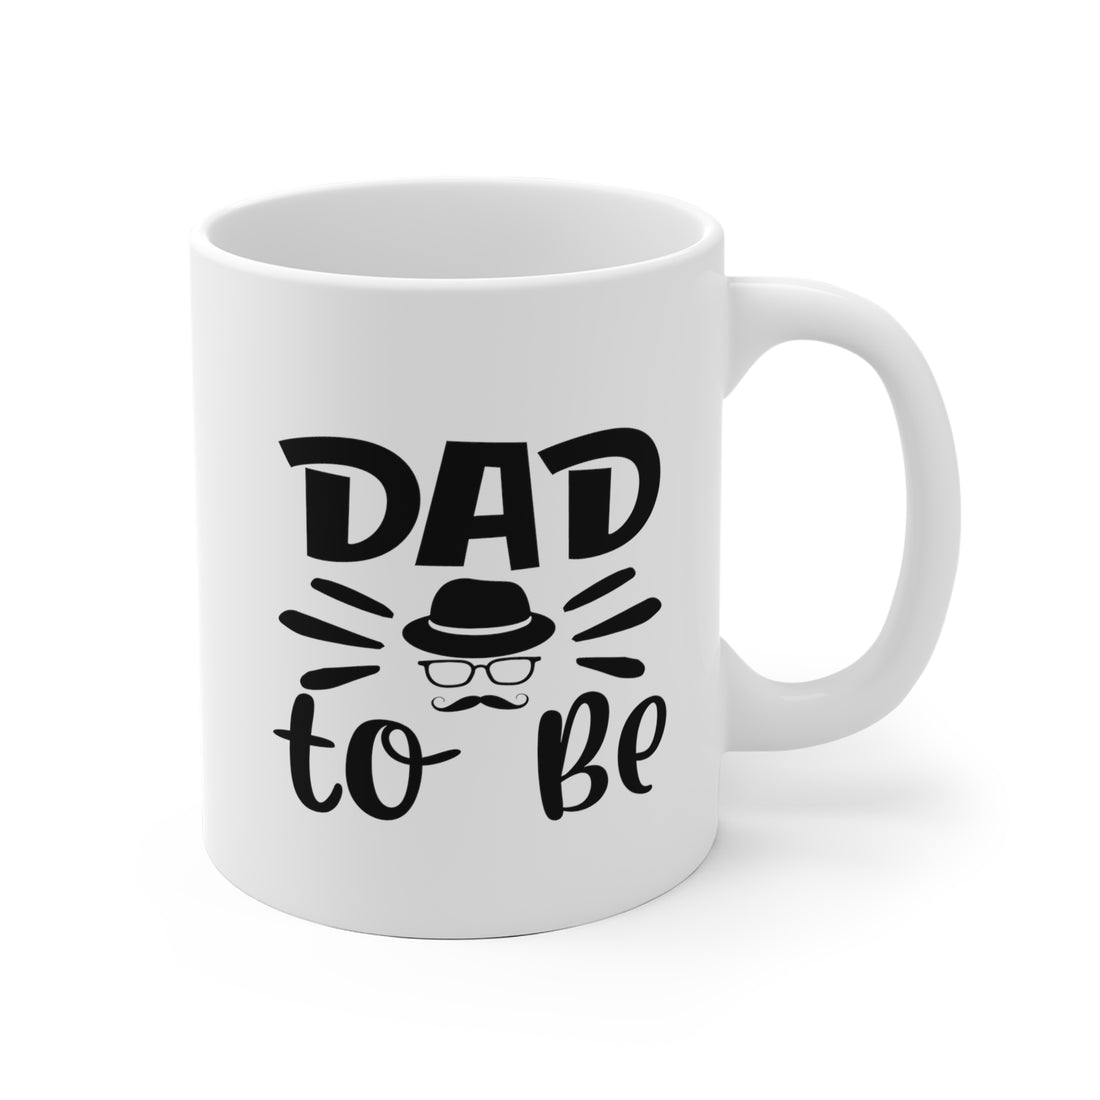 Dad To Be - White Ceramic Mug 2 sizes Available